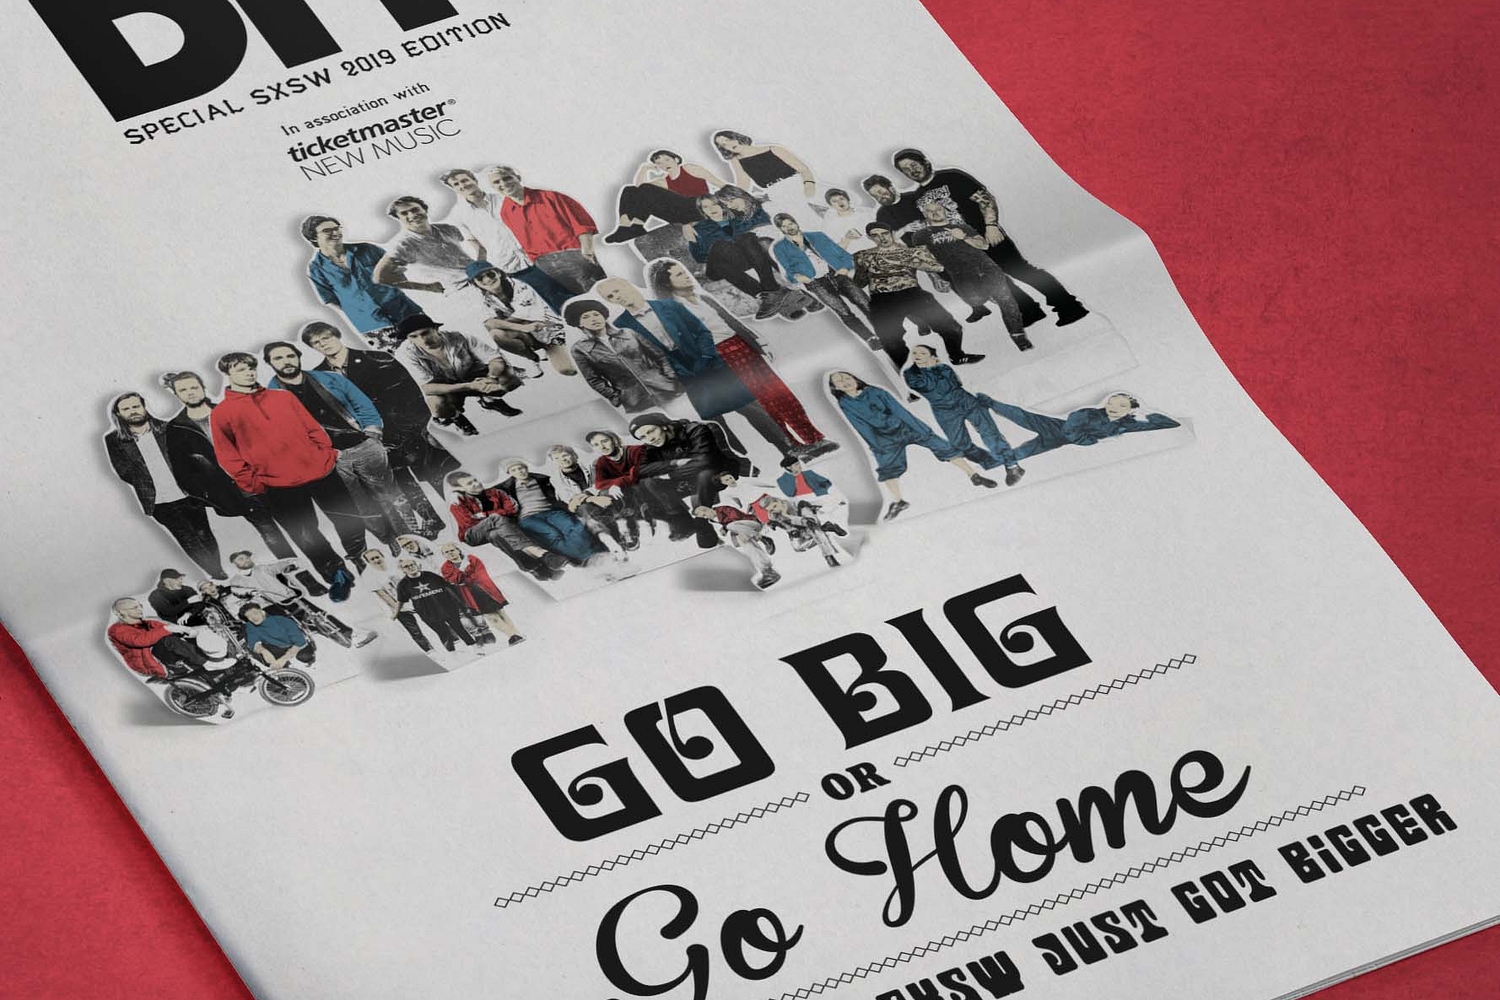 Introducing Go Big Or Go Home - DIY’s special edition New Colossus & SXSW newspaper